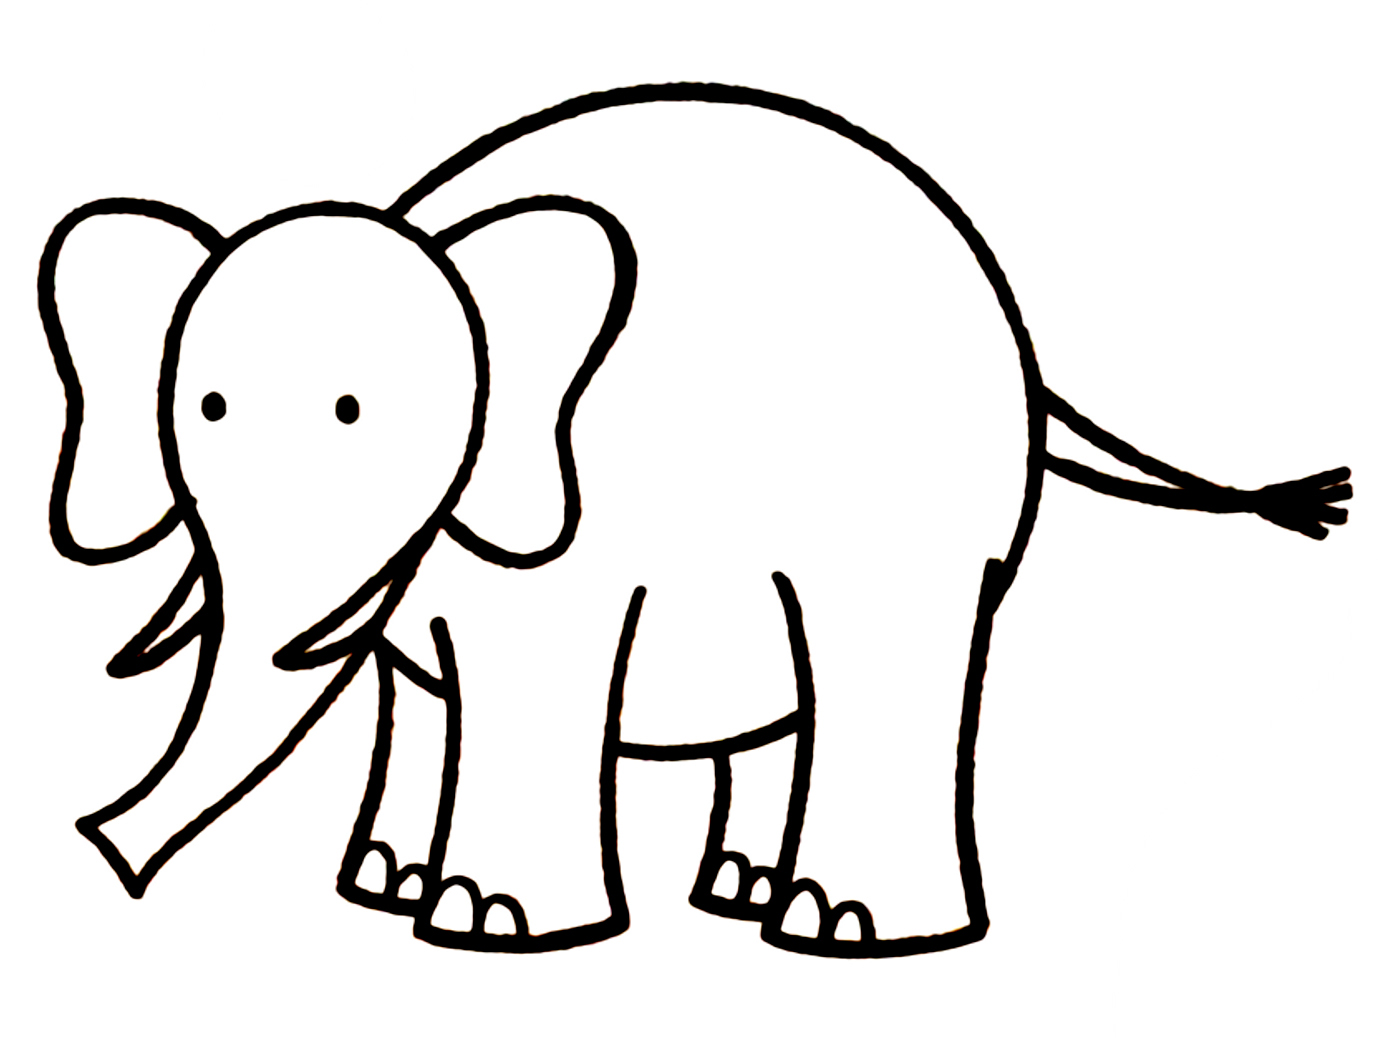 elephant clipart sketch